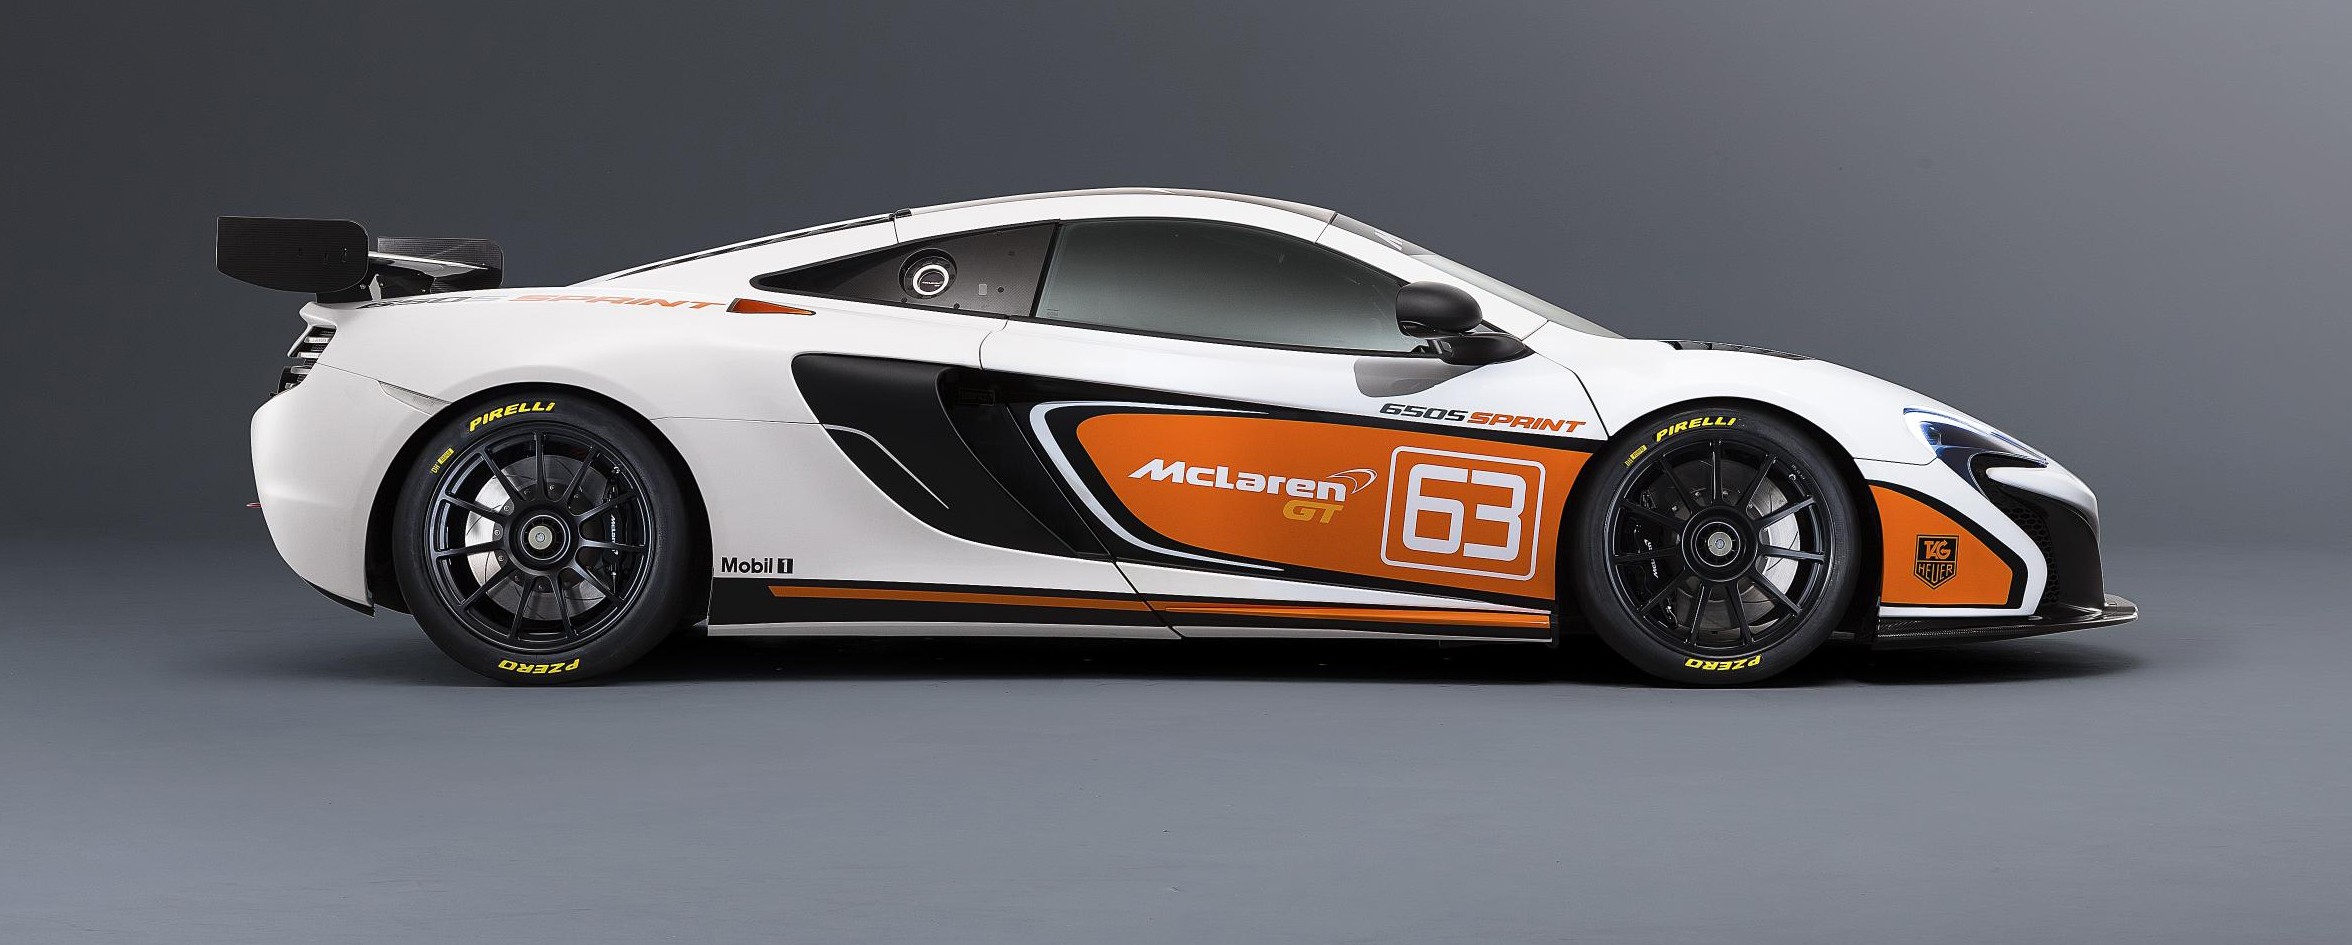 McLaren_650SGTSprint_profile_1c-Edit